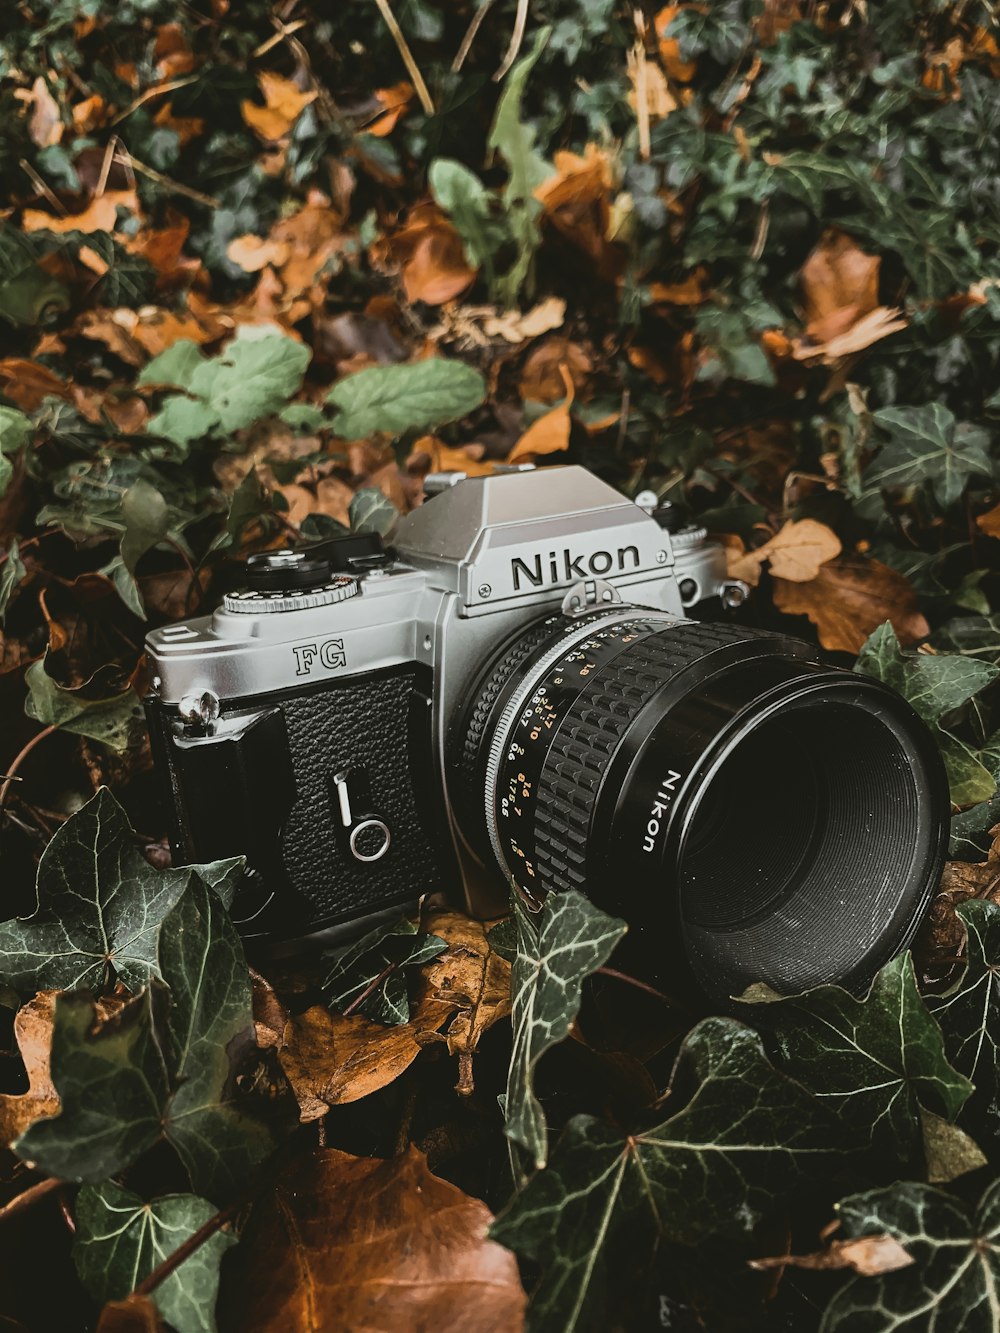 cámara réflex Nikon gris y negra